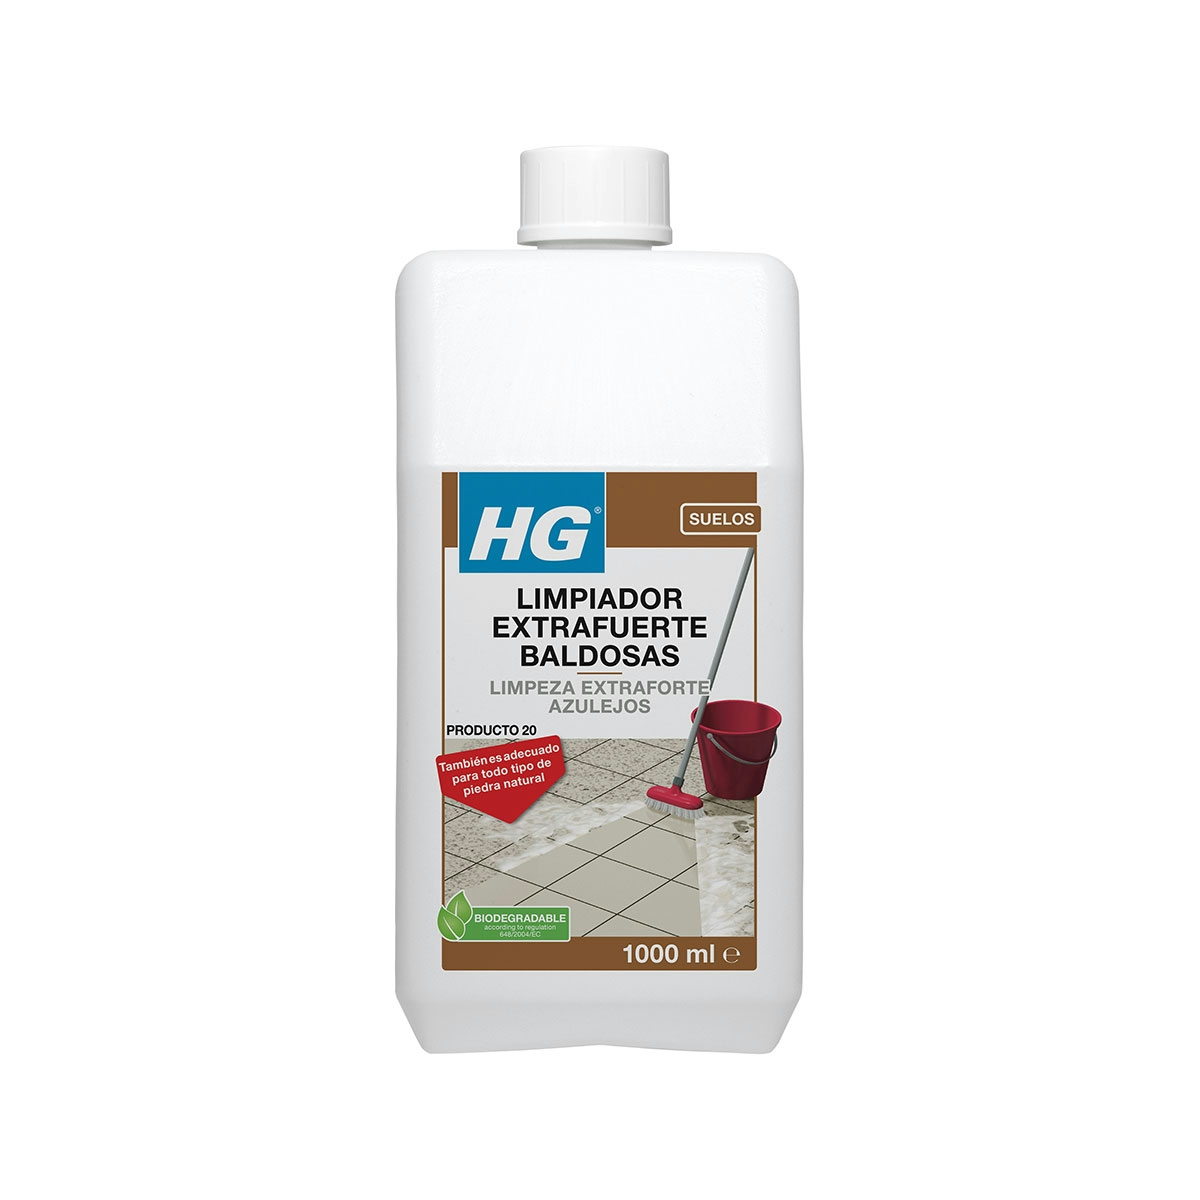 HG Limpiador extrafuerte baldosas (producto 20)